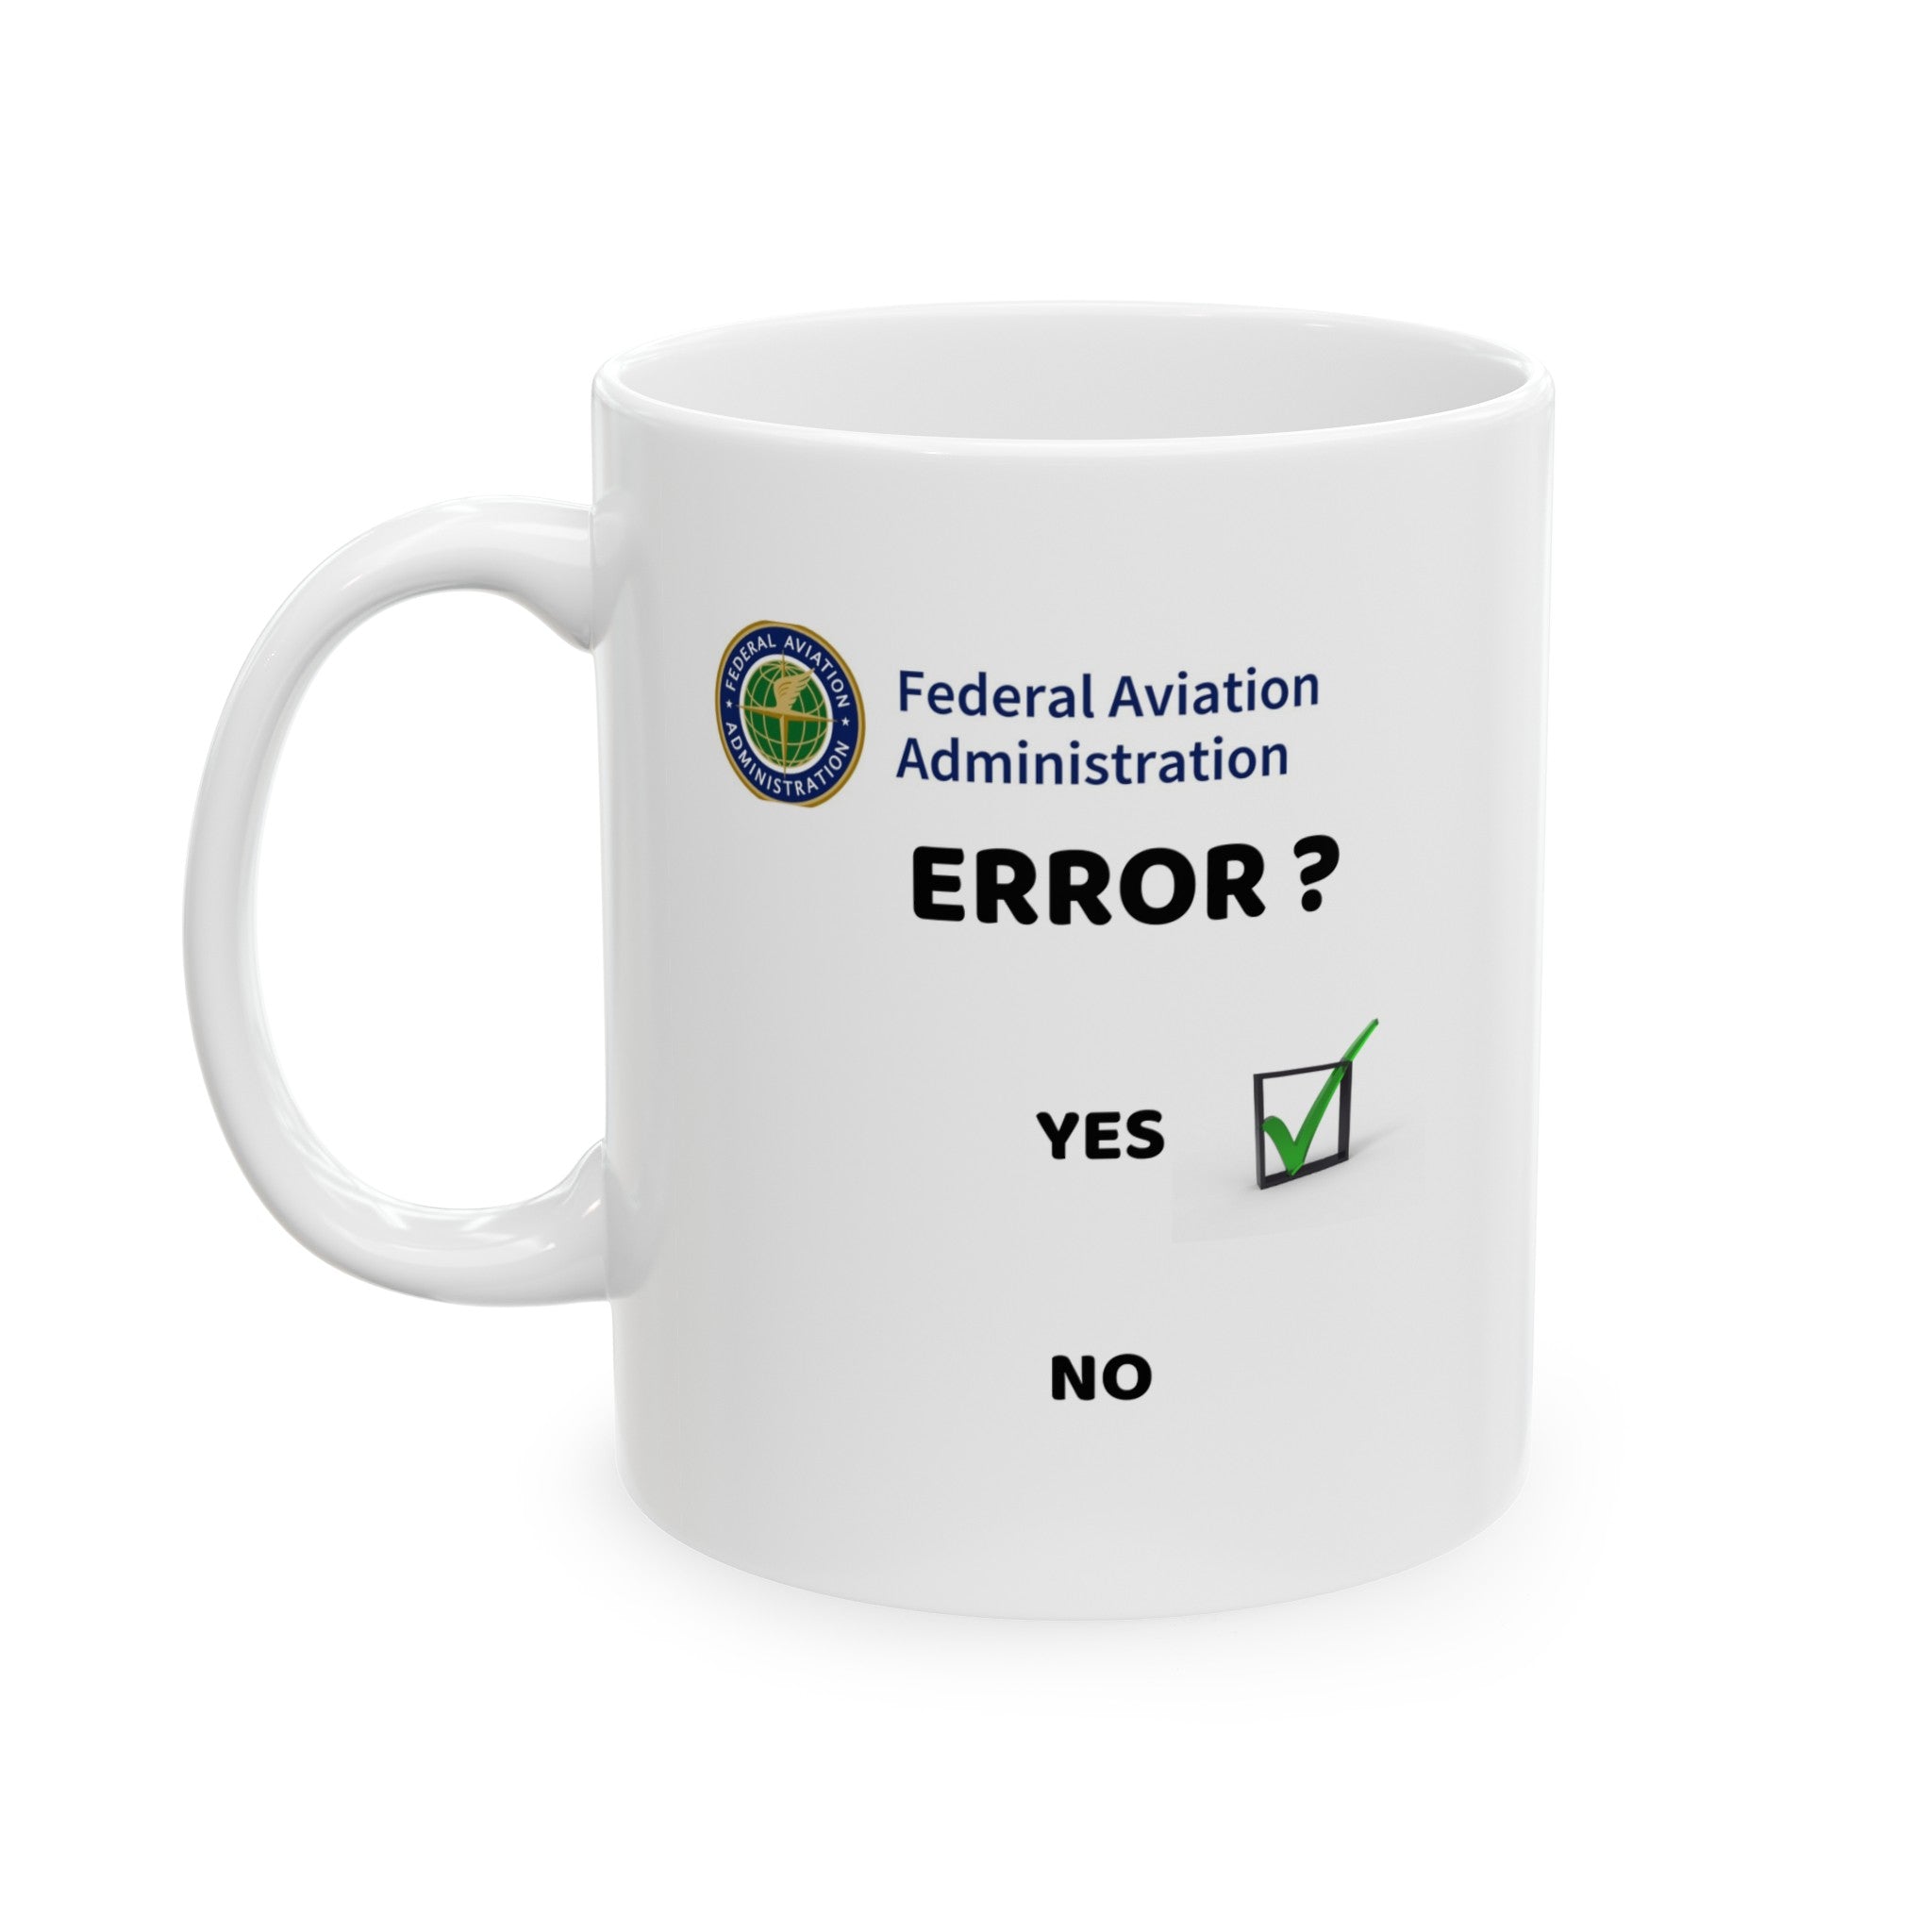 "FAA ERROR YES.  Pilot Error NO" - Cool MUGS for Pilots